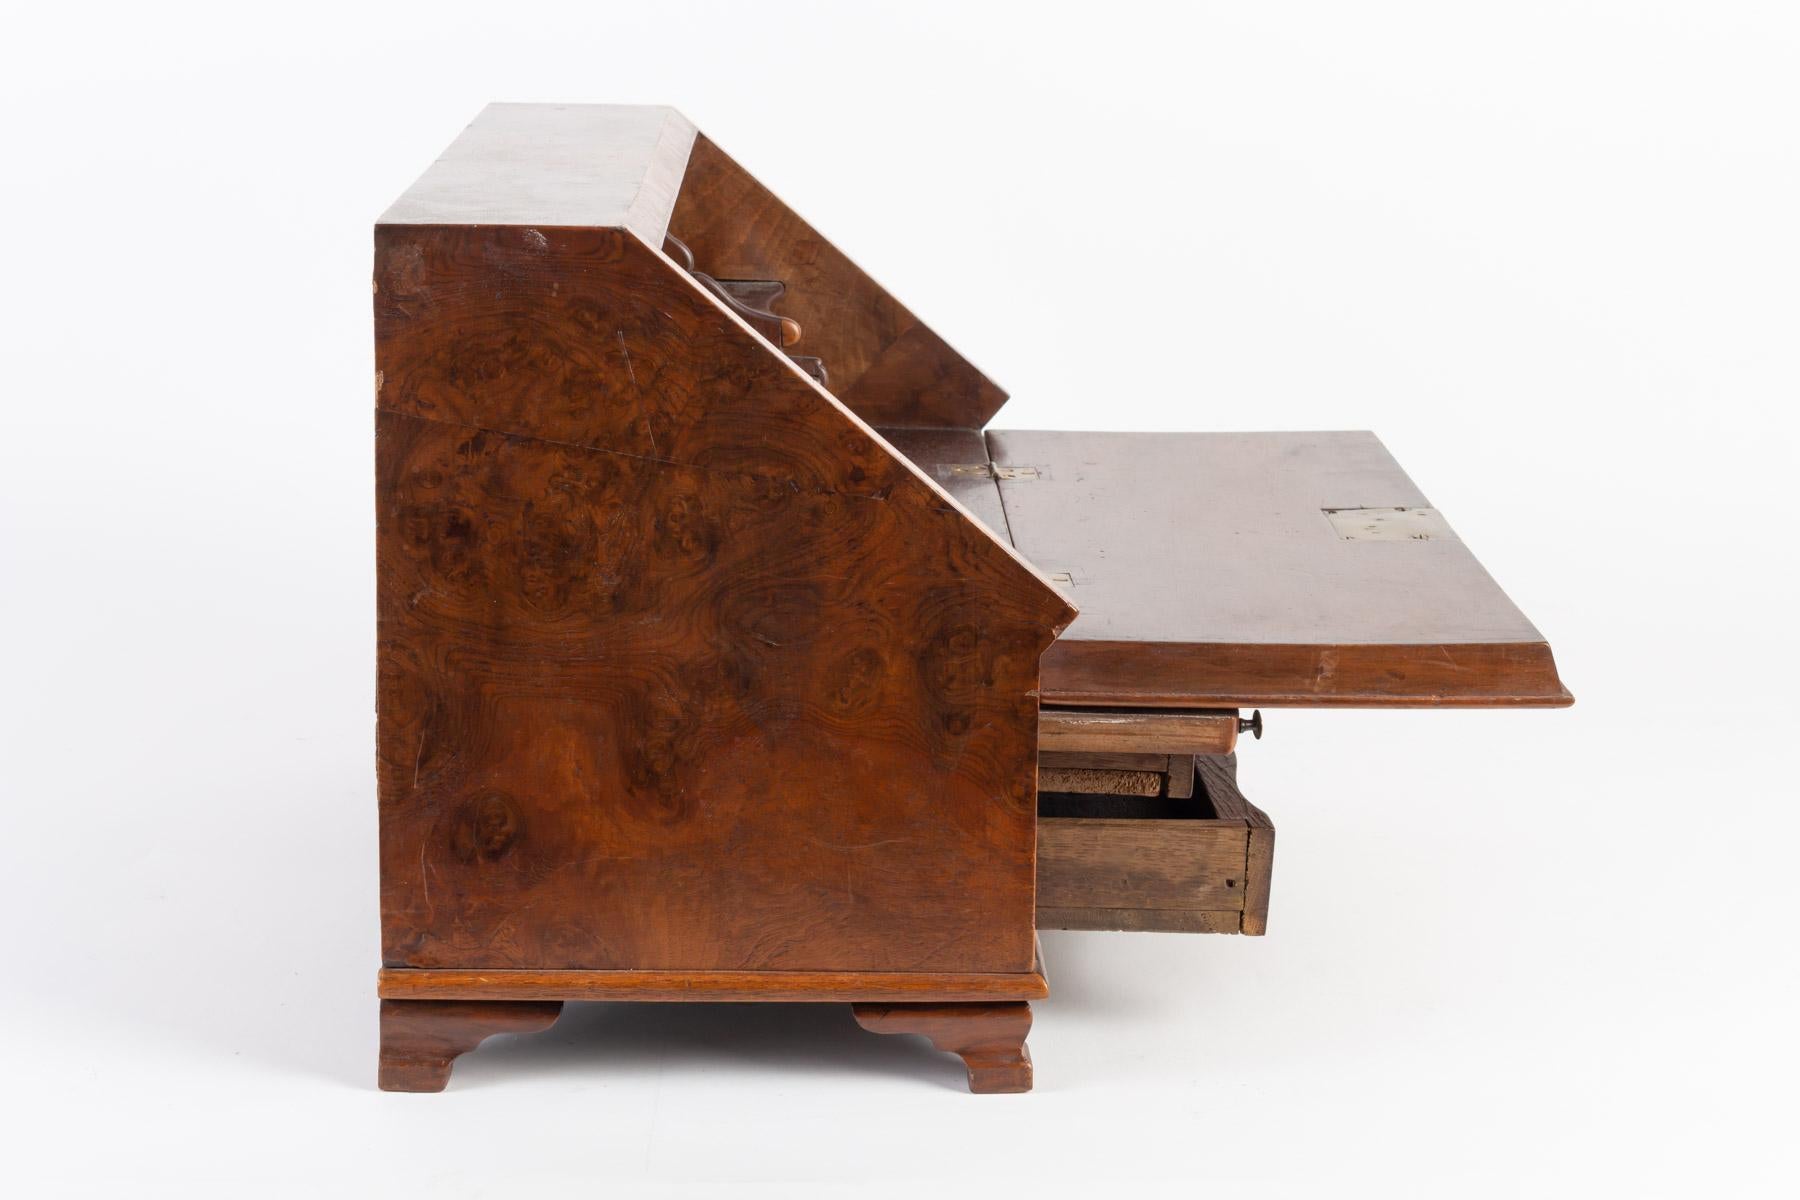 19th century miniature secretary-miniature writing desk, 2 drawers in belt
Measures: H 34cm, W 46cm, D 26cm.